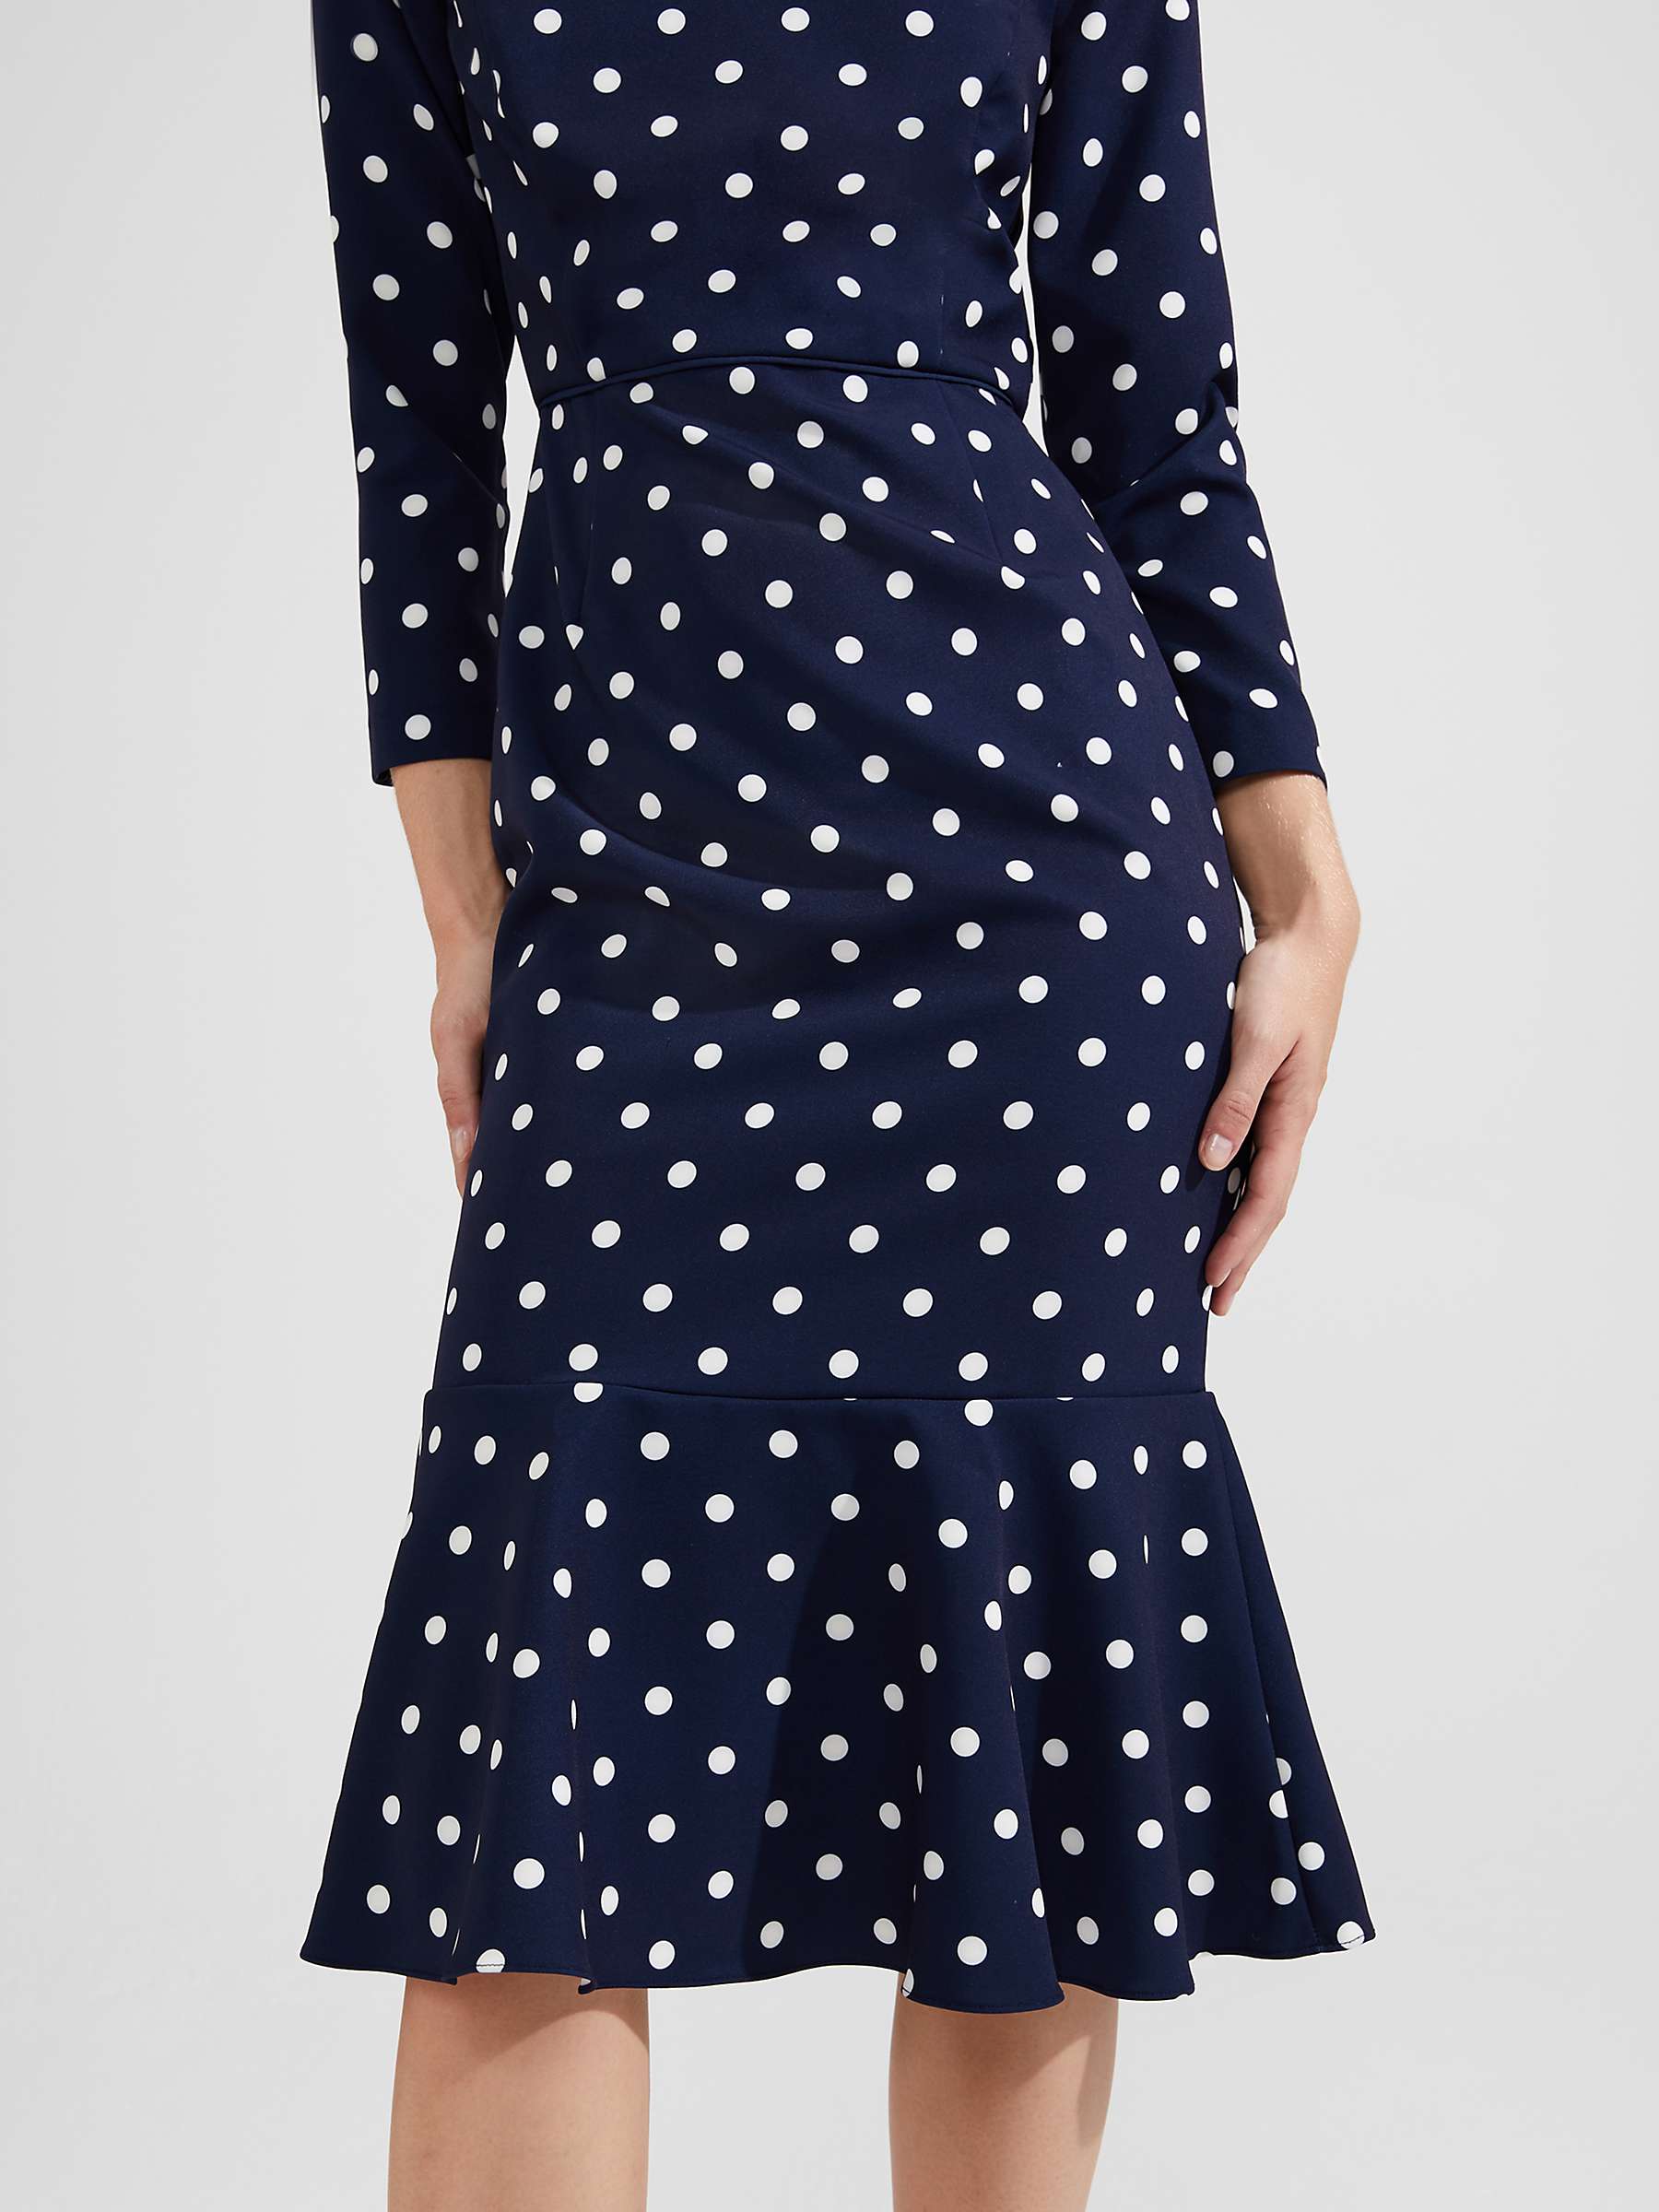 Buy Hobbs Liza Polka Dot Knee Length Dress, Navy/Ivory Online at johnlewis.com